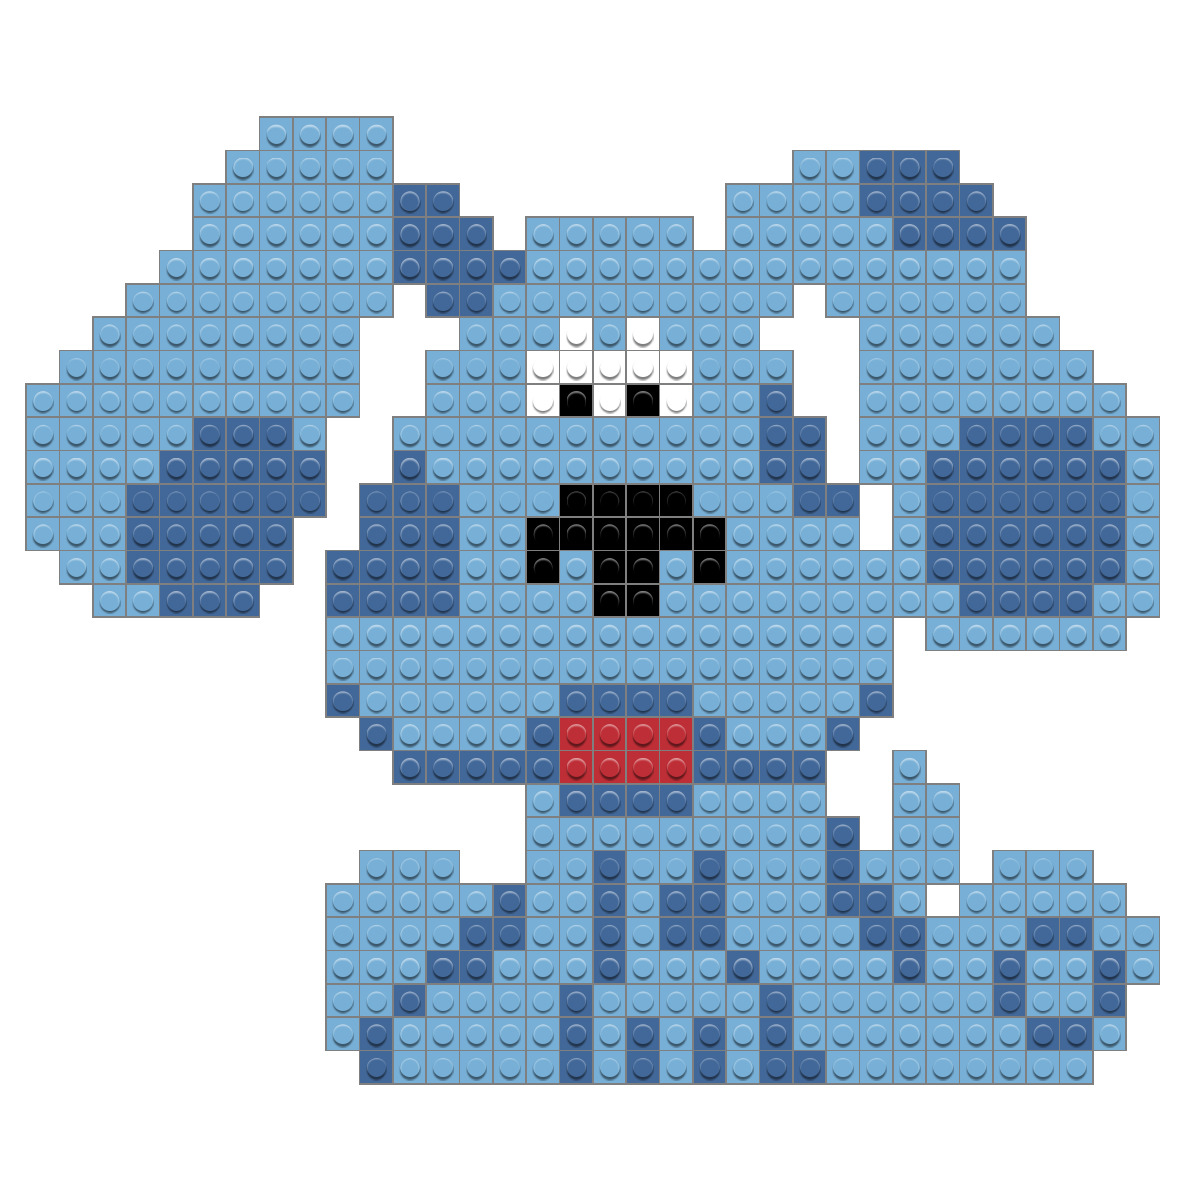 St. Louis Blues (8-bit Retro Pixel Art Videogame Player